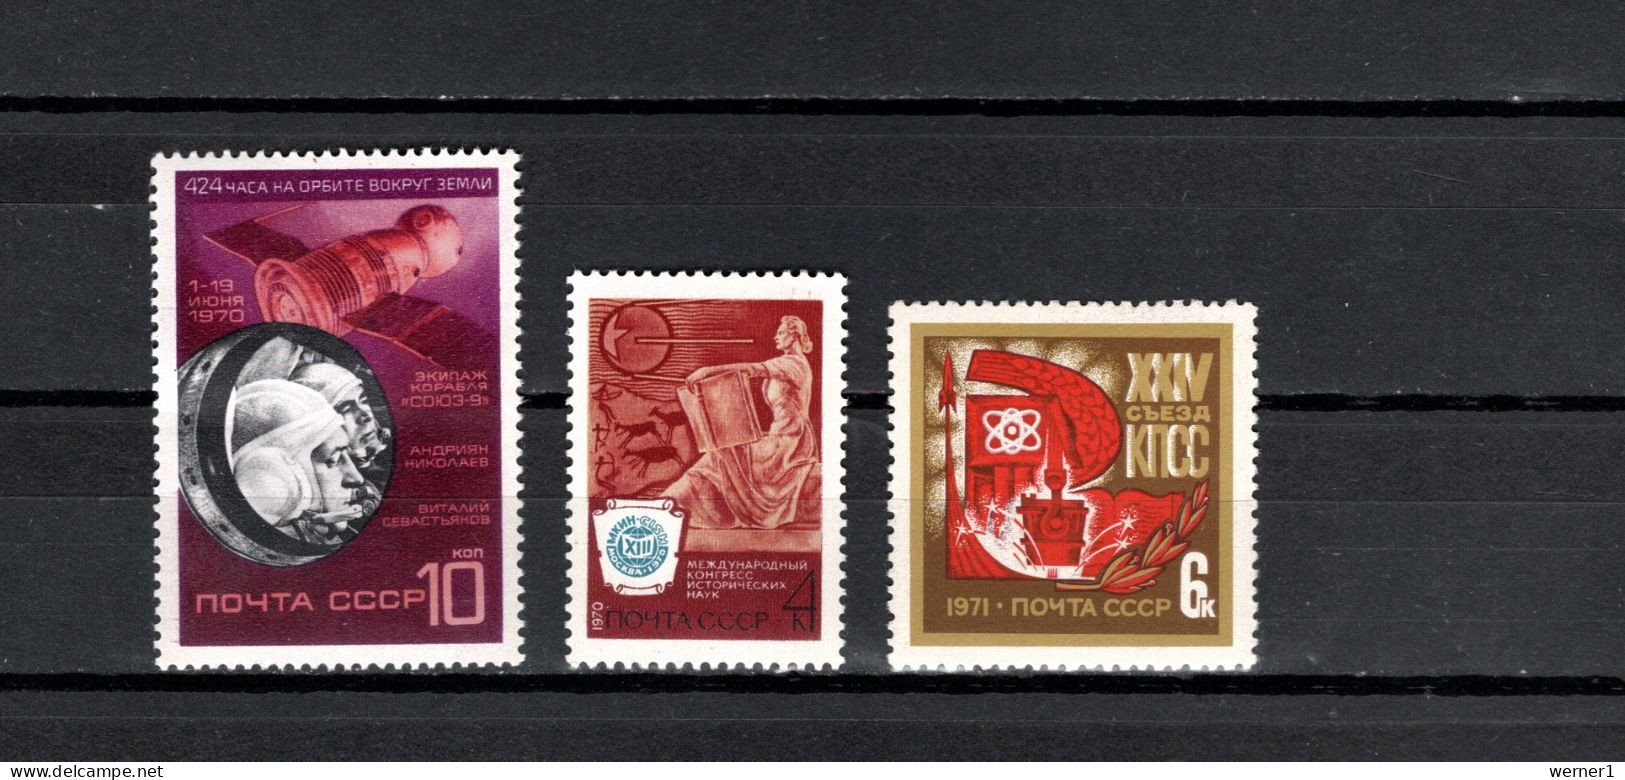 USSR Russia 1970/1971 Space, Soyuz 9, Science Congress, Communist Party, 3 Stamps MNH - Rusland En USSR